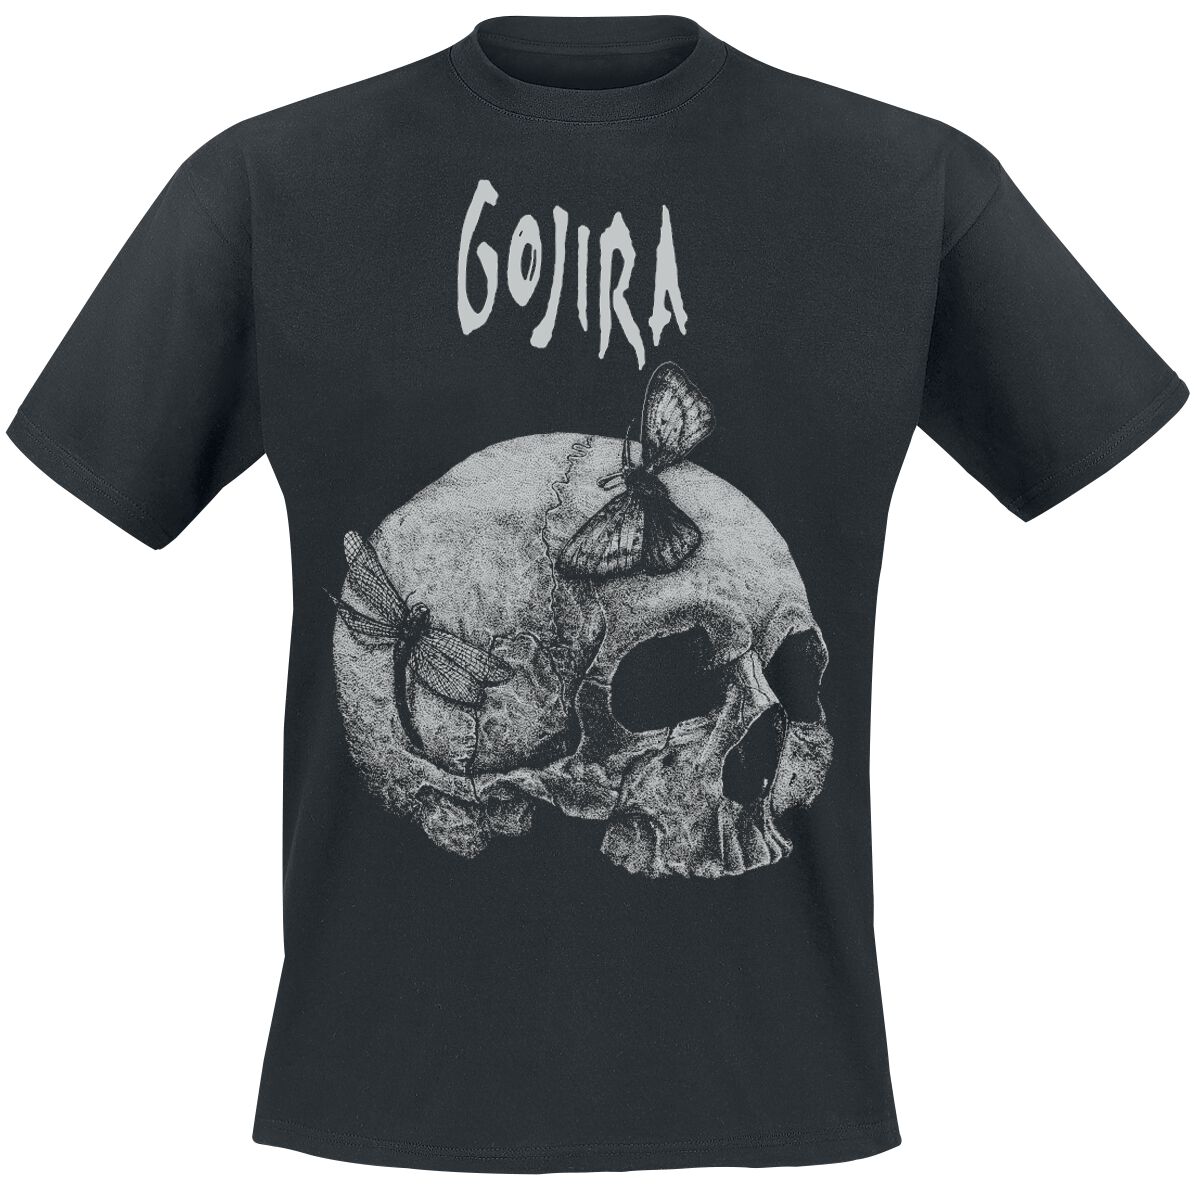 Image of Gojira Moth Skull T-Shirt schwarz